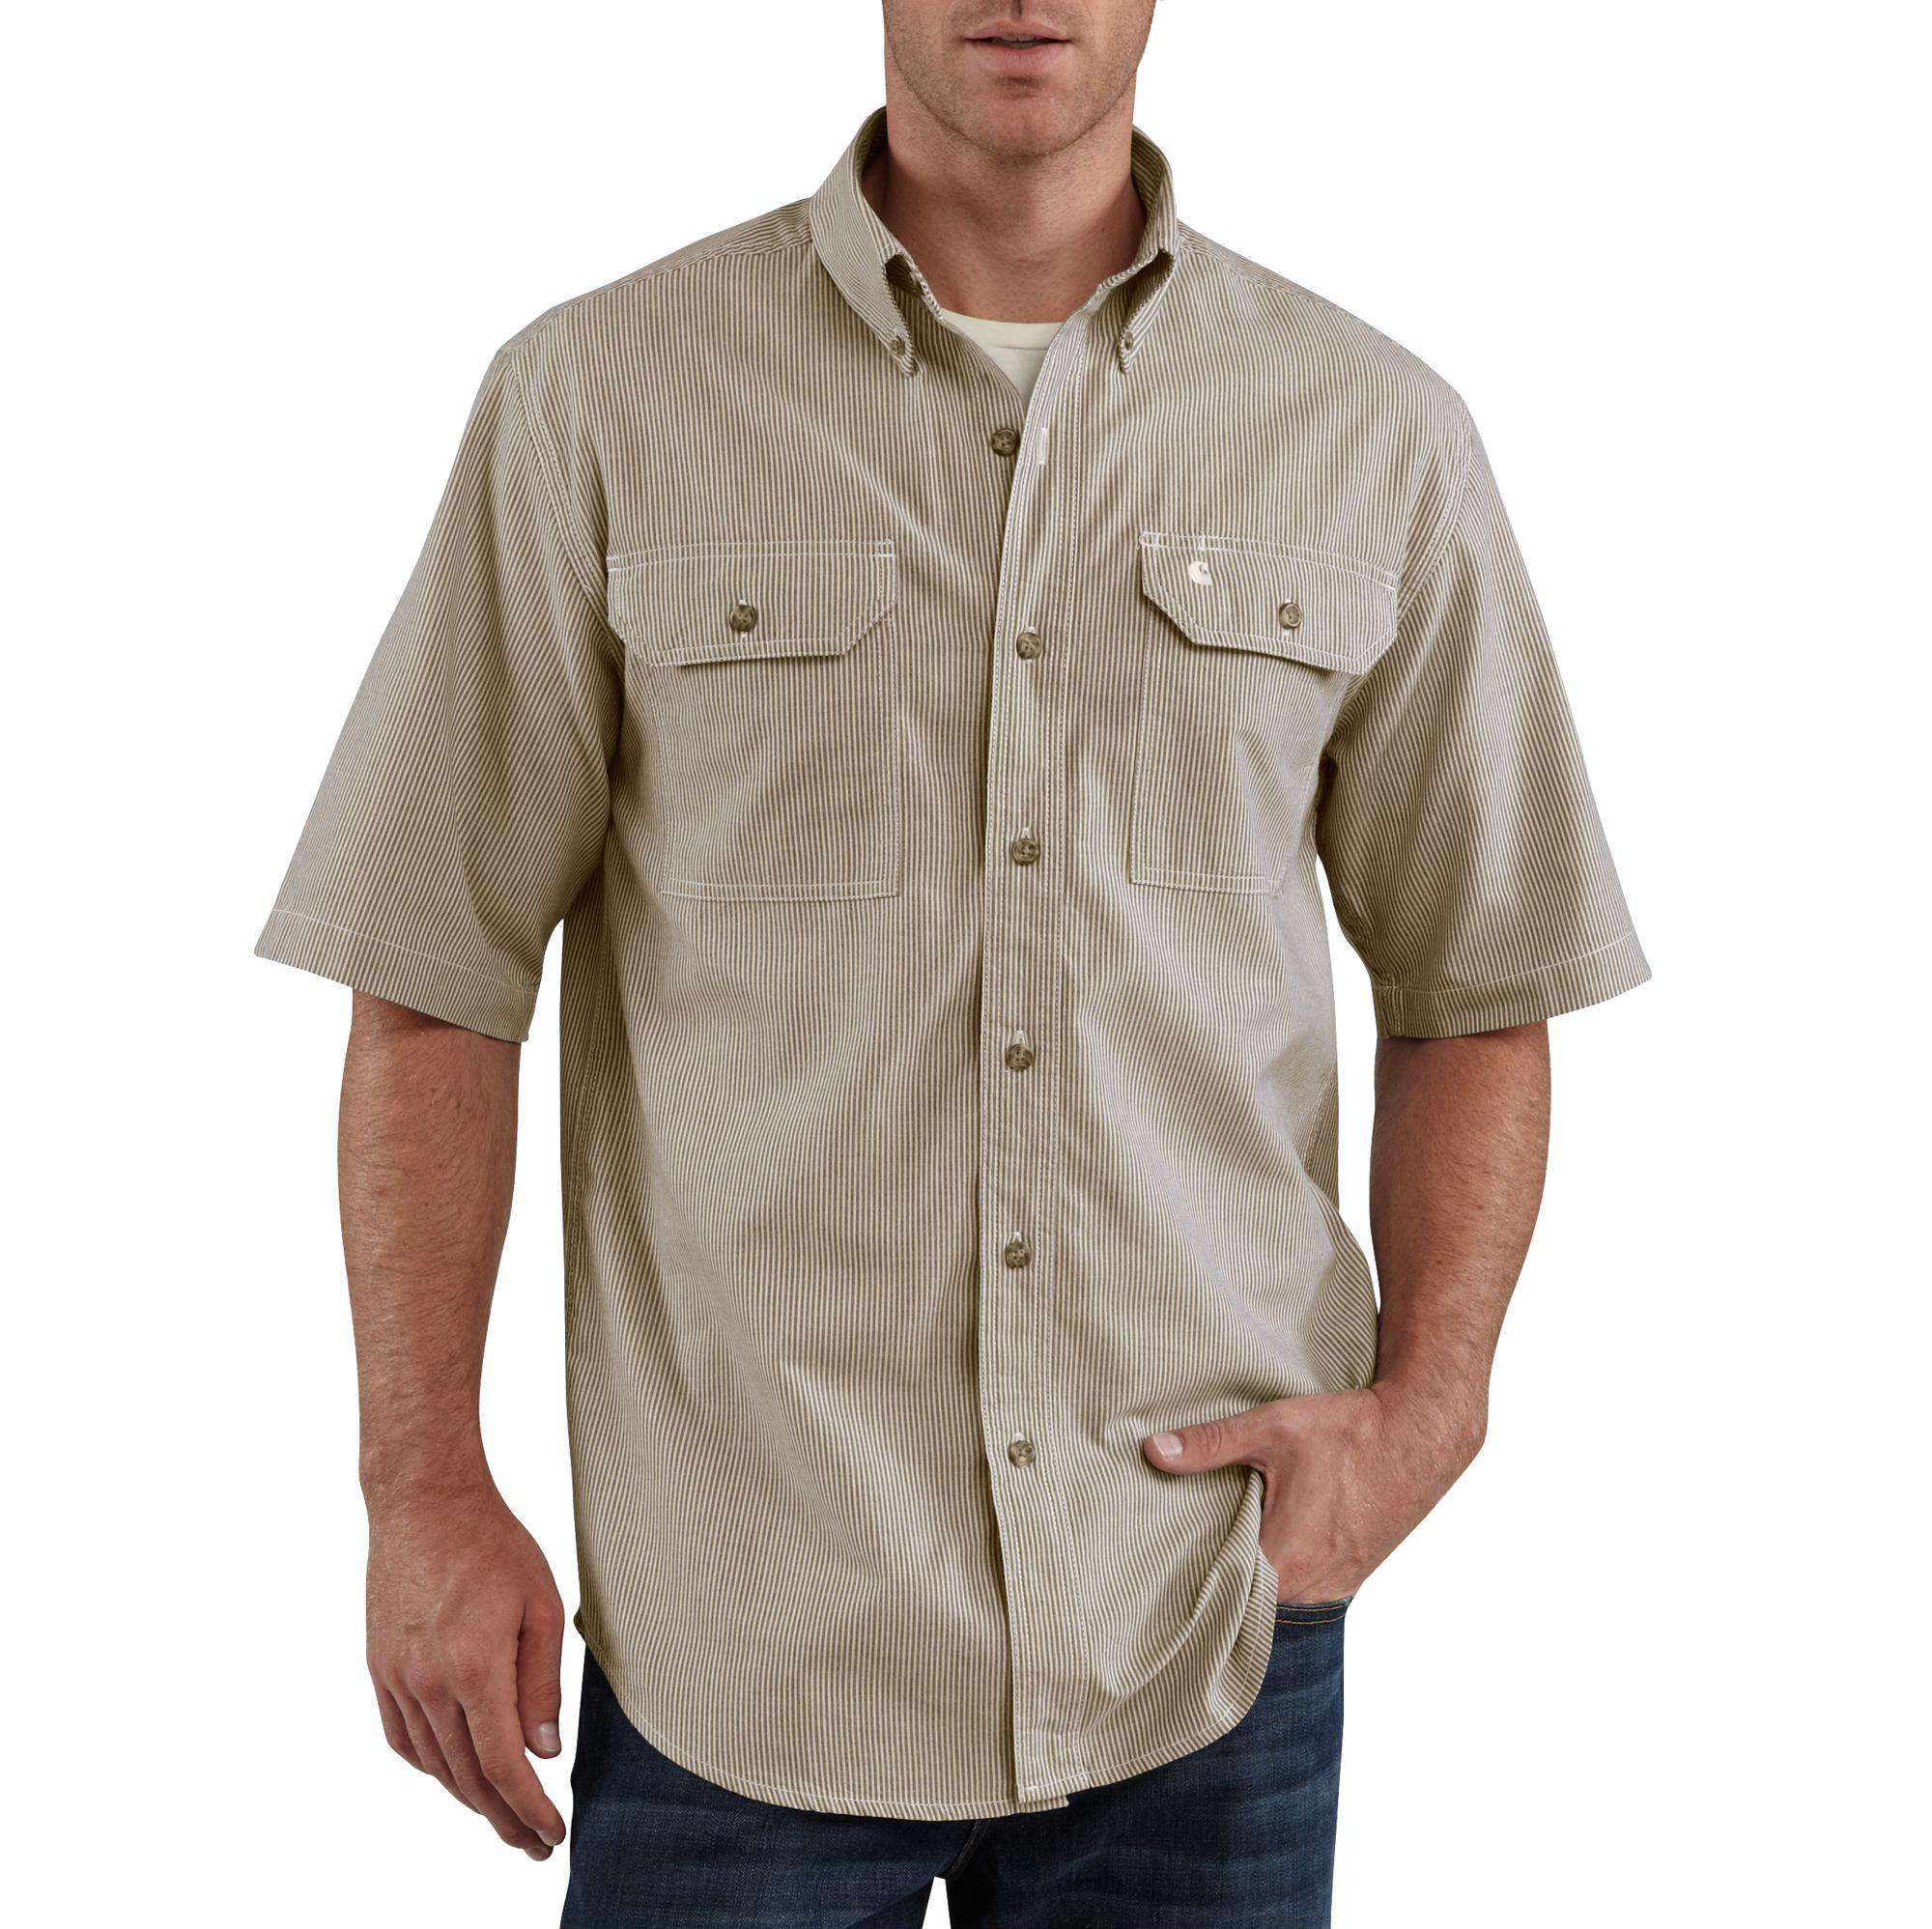 Men's Short-Sleeve Chambray Striped Shirt